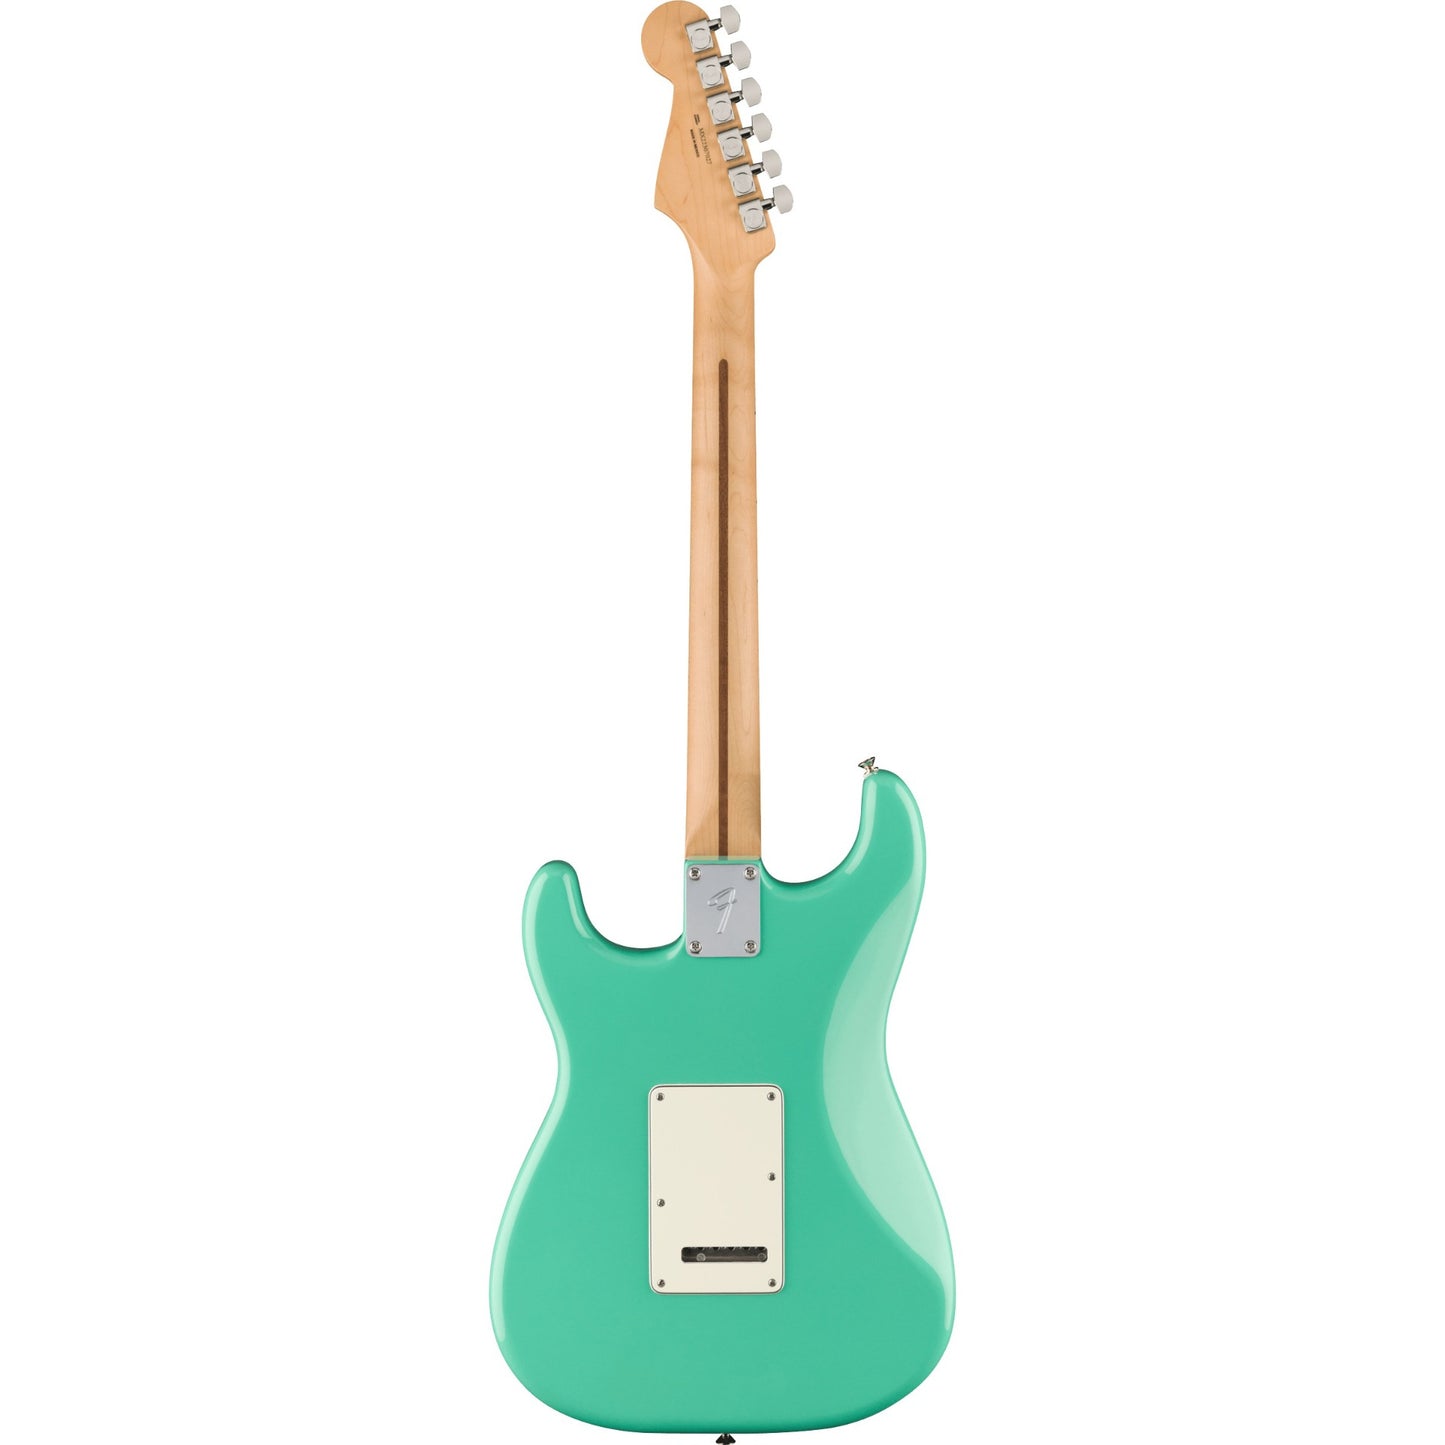 Fender Player Stratocaster® HSS Electric Guitar, Sea Foam Green